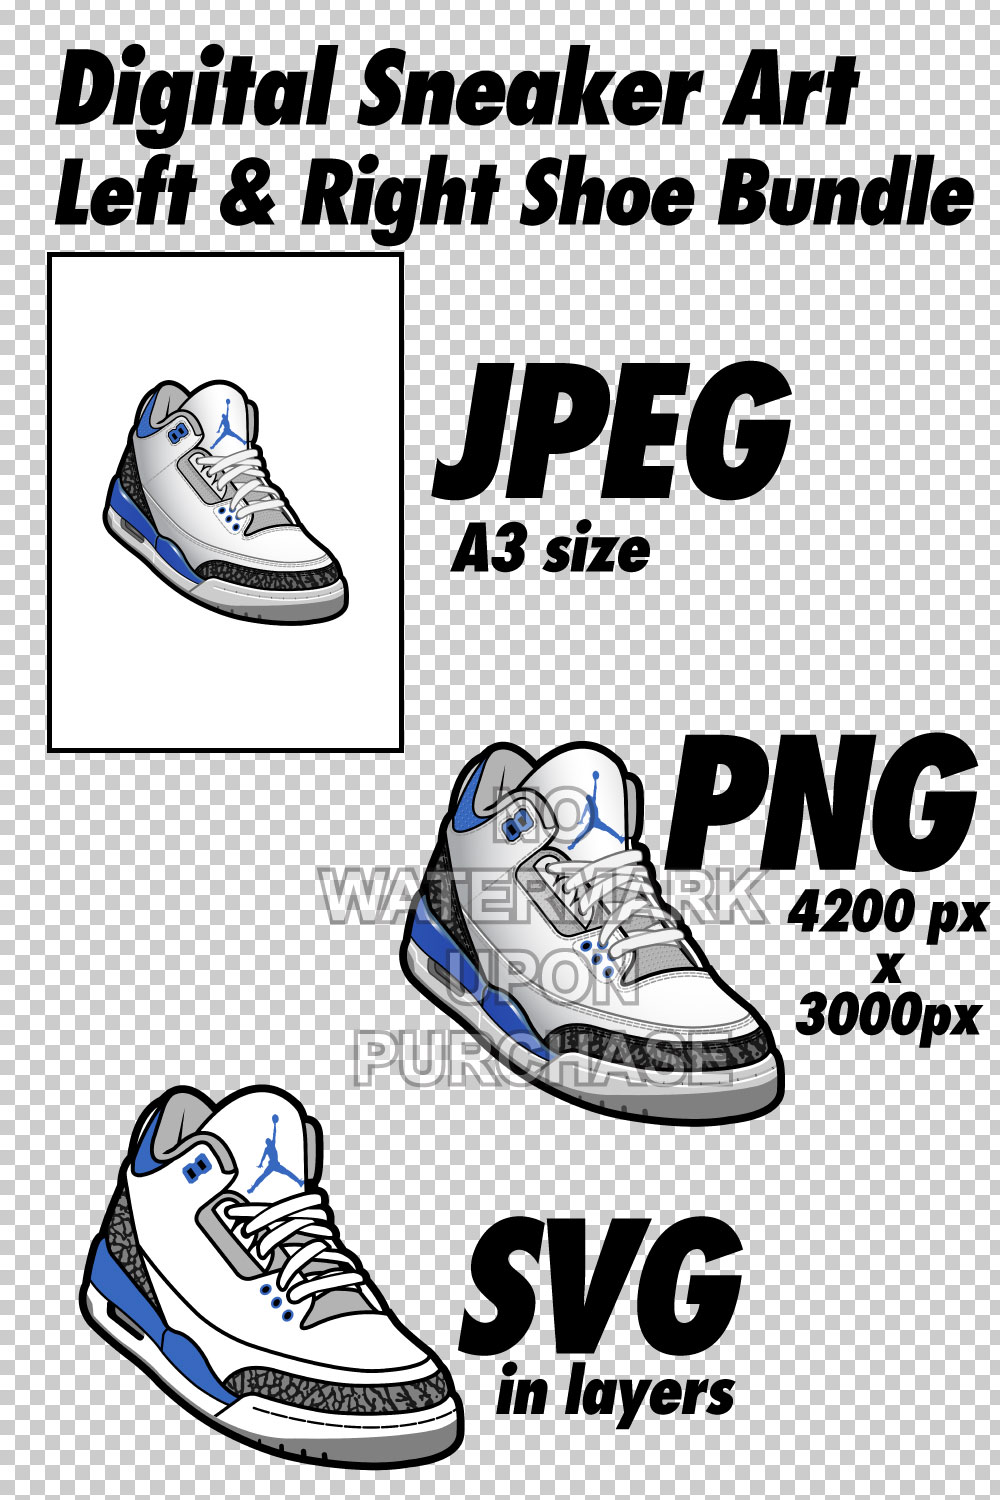 Air Jordan 3 Racer Blue JPEG PNG SVG right & left shoe bundle pinterest preview image.